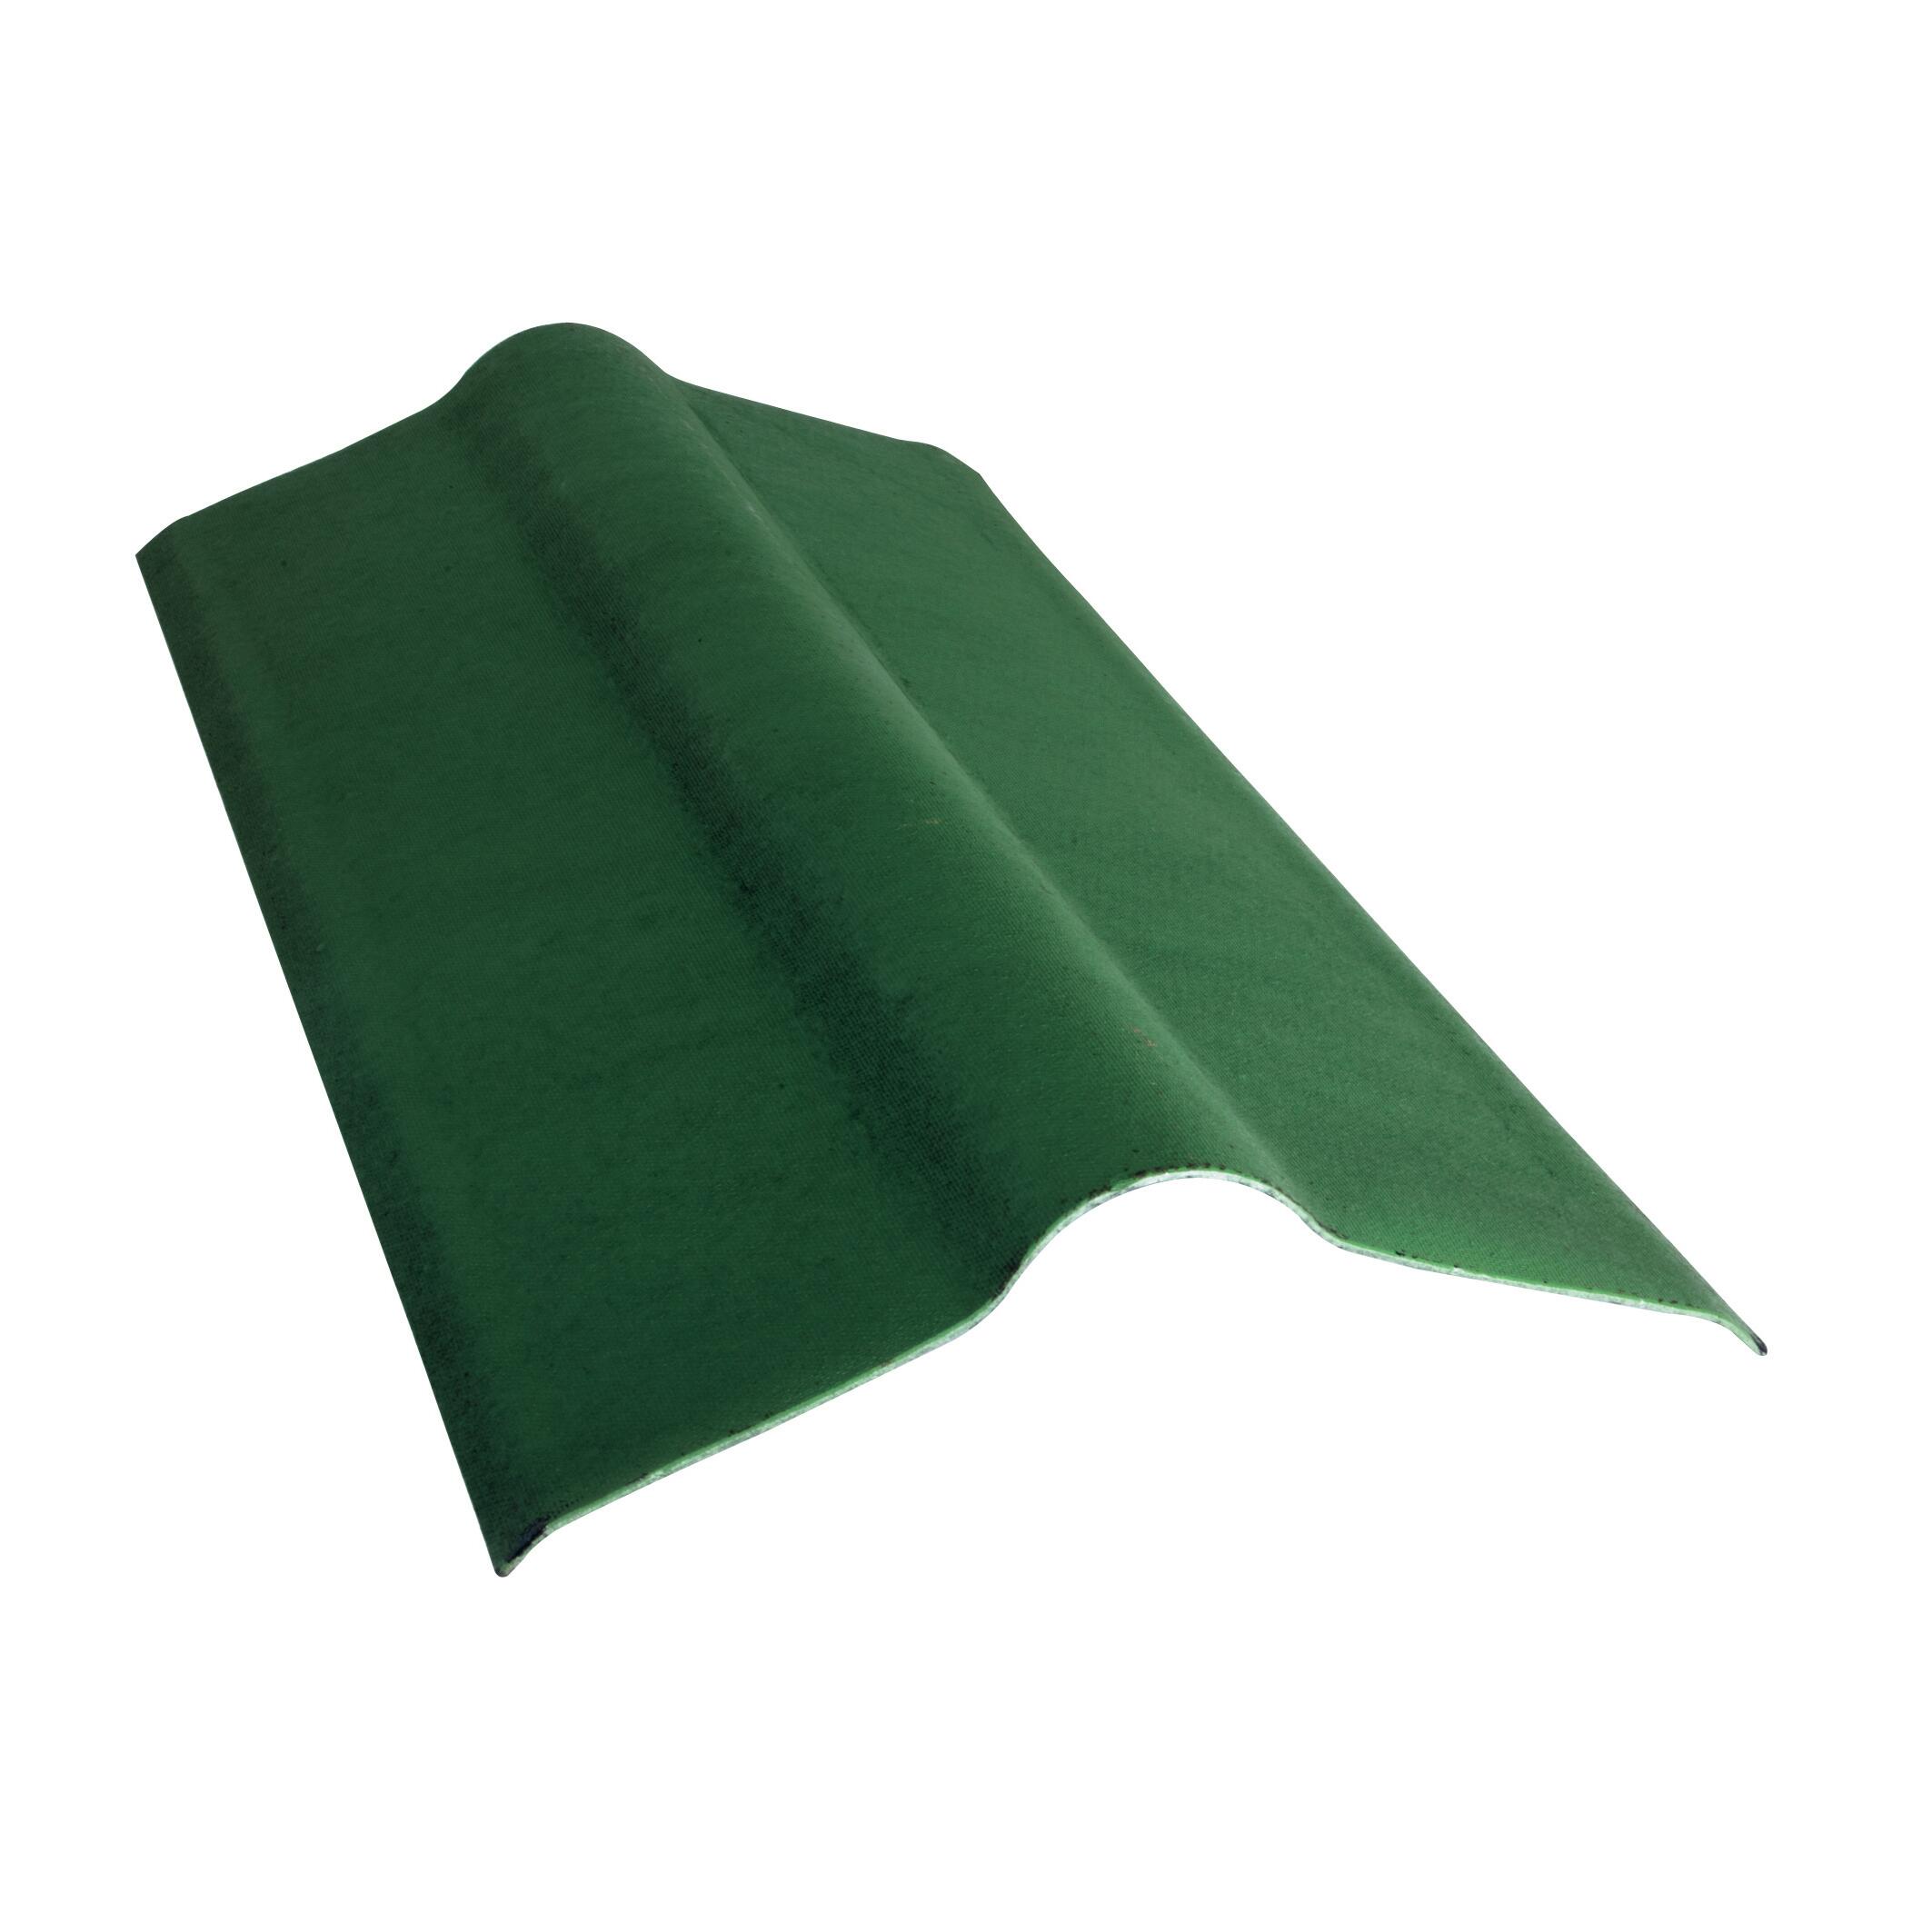 Colmo ONDULINE in cellulosa L 50 x H 100 cm Ø 48.5 cm verde